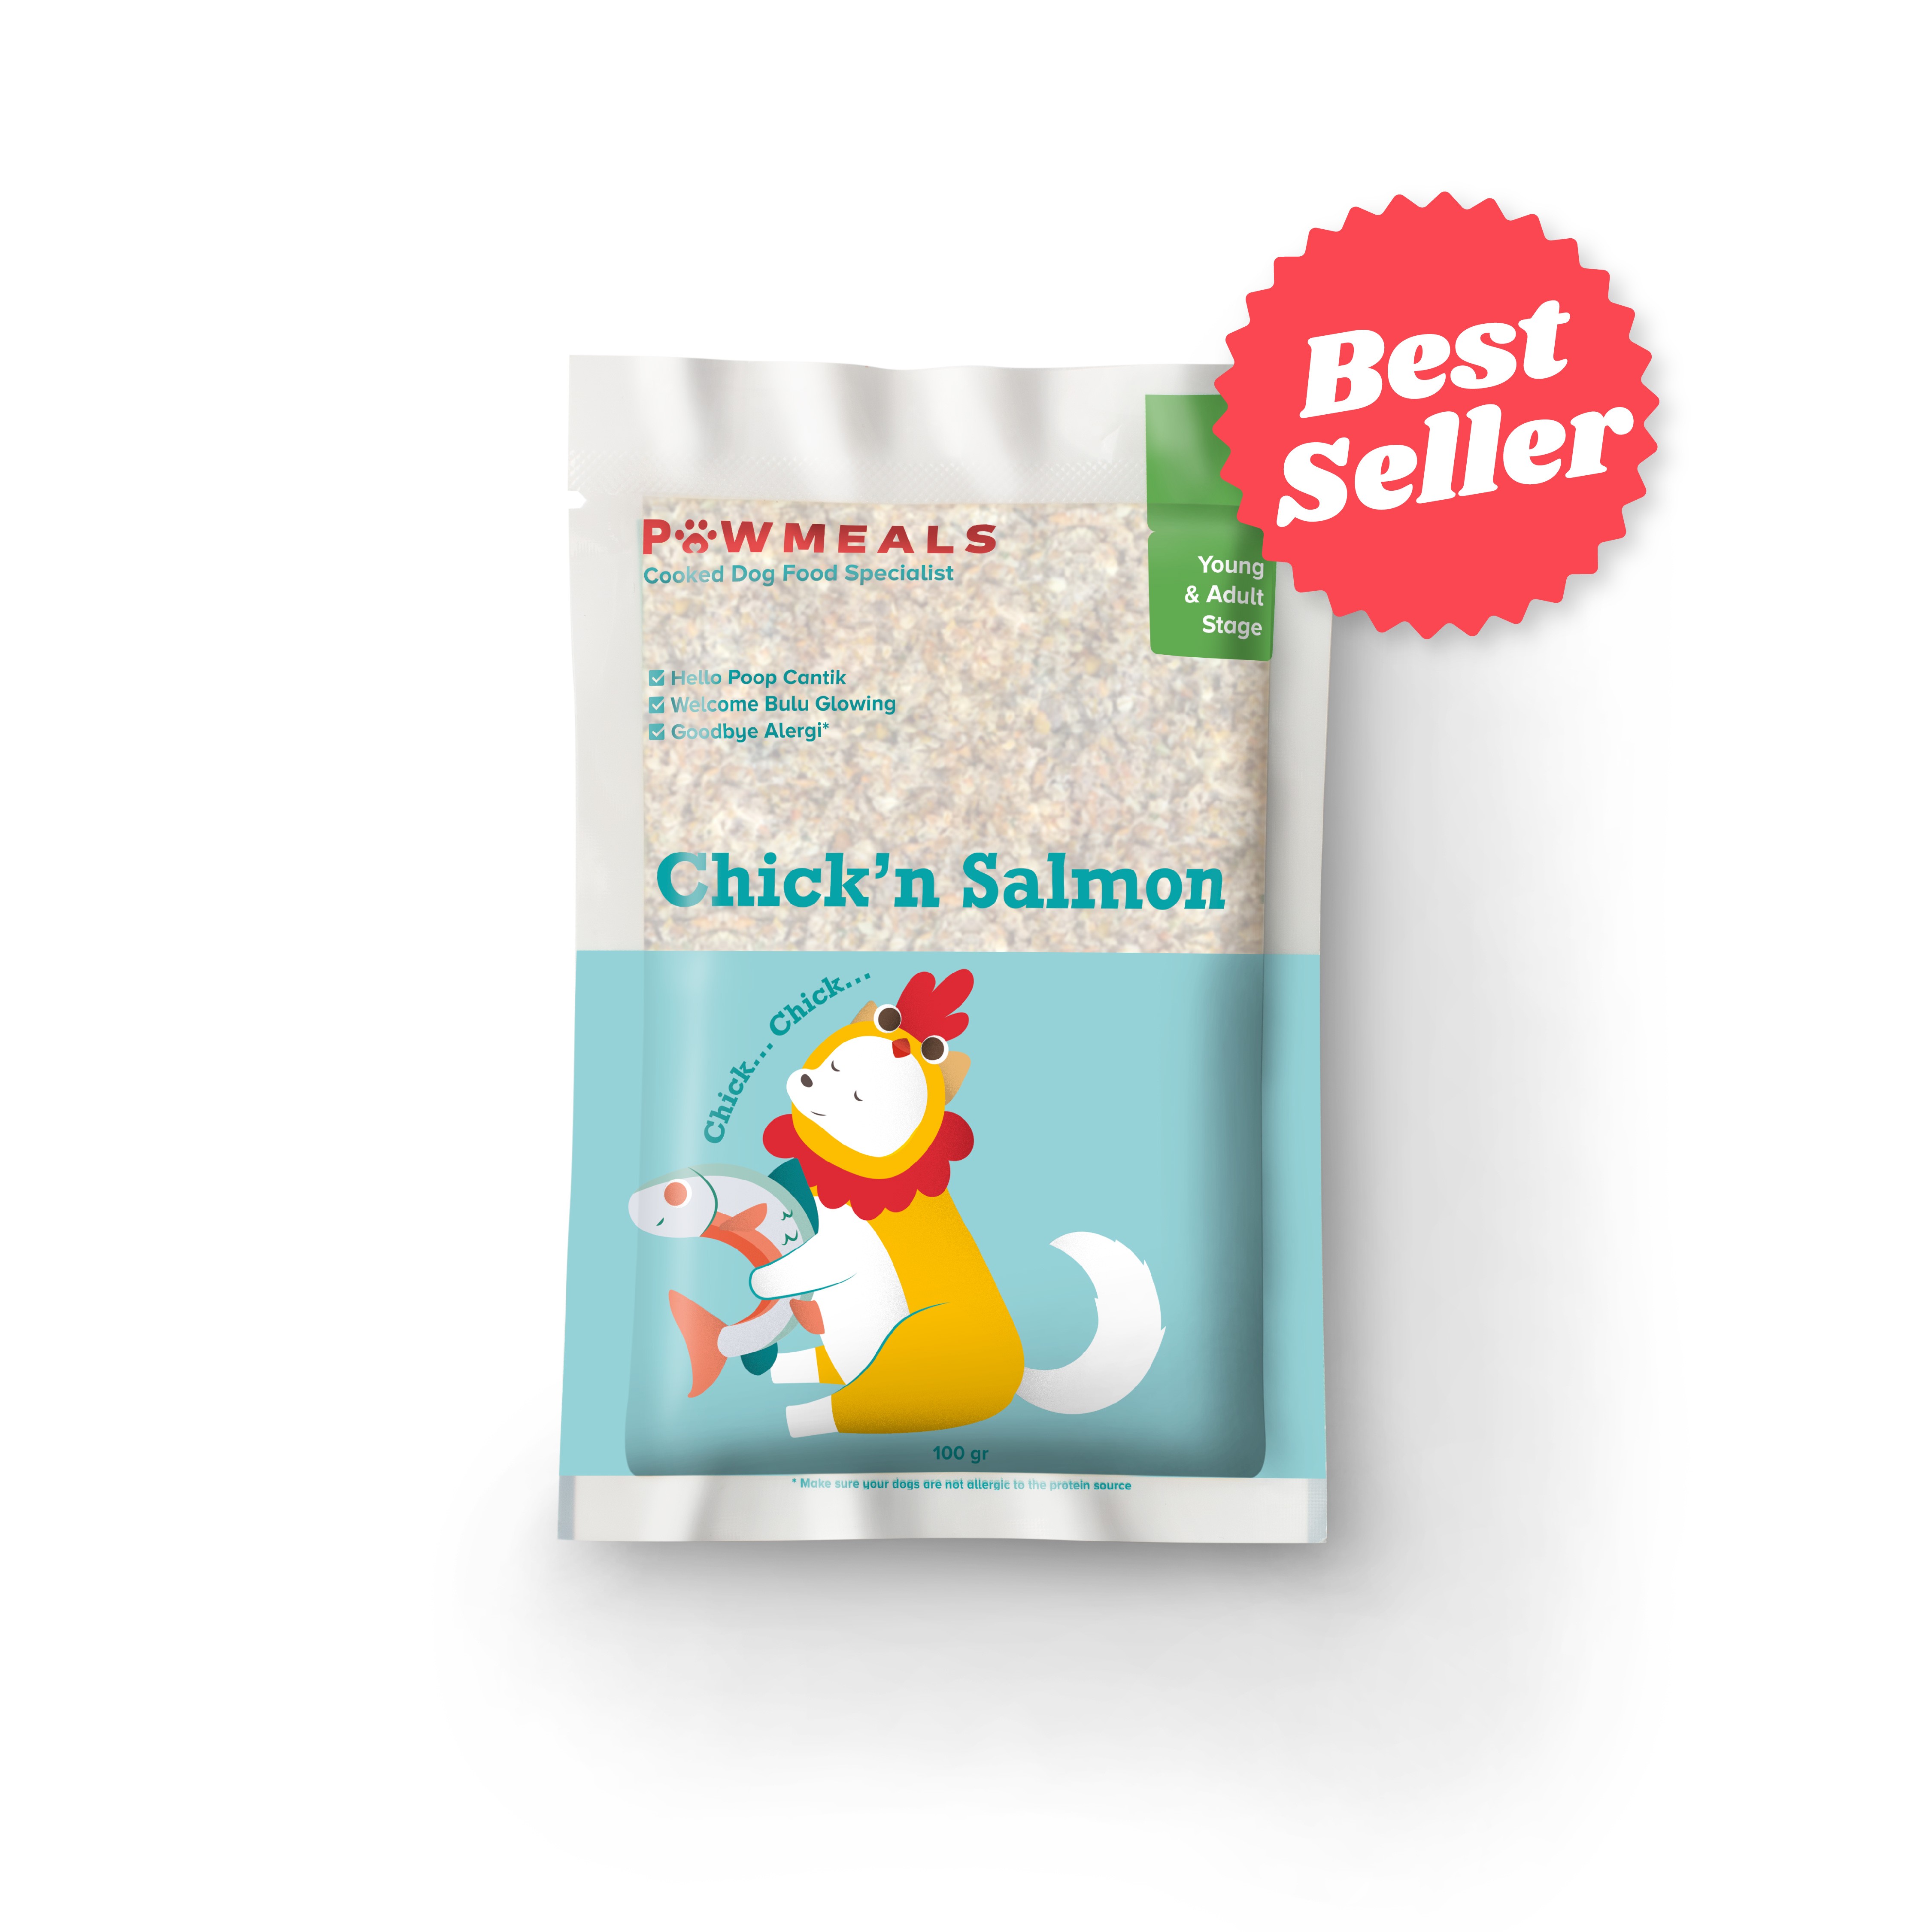 Chick'n Salmon